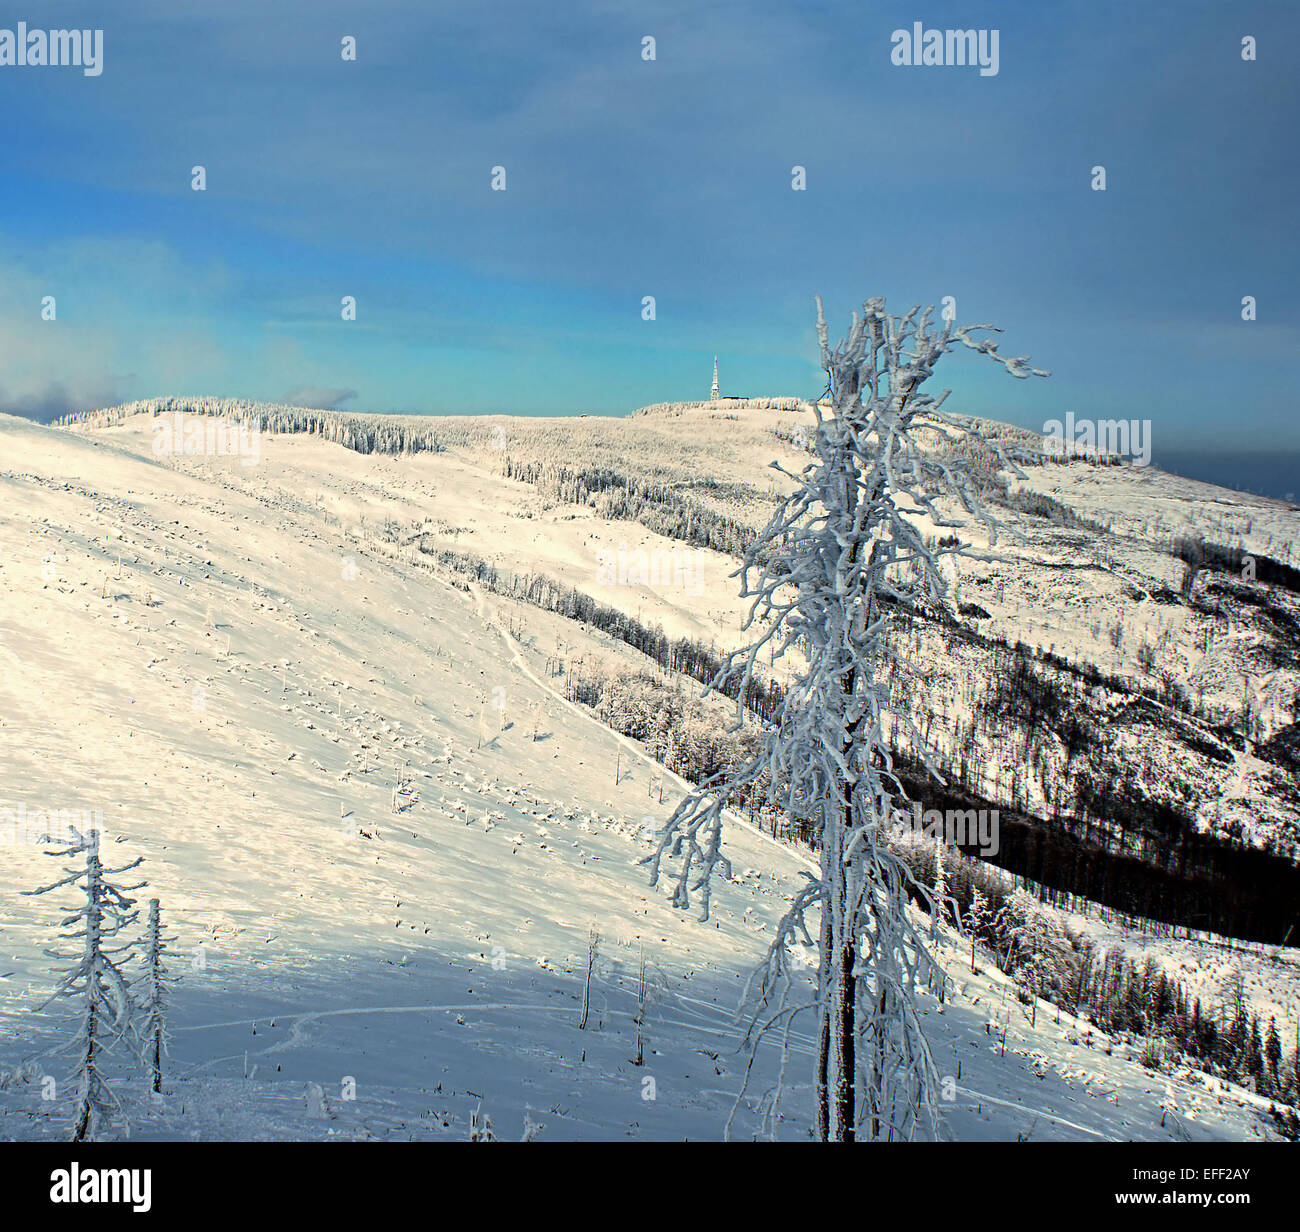 Male Skrzyczne and Skrzyczne hill in Beskid Slaski Mts. from Malinowska Skala during nice winter day Stock Photo